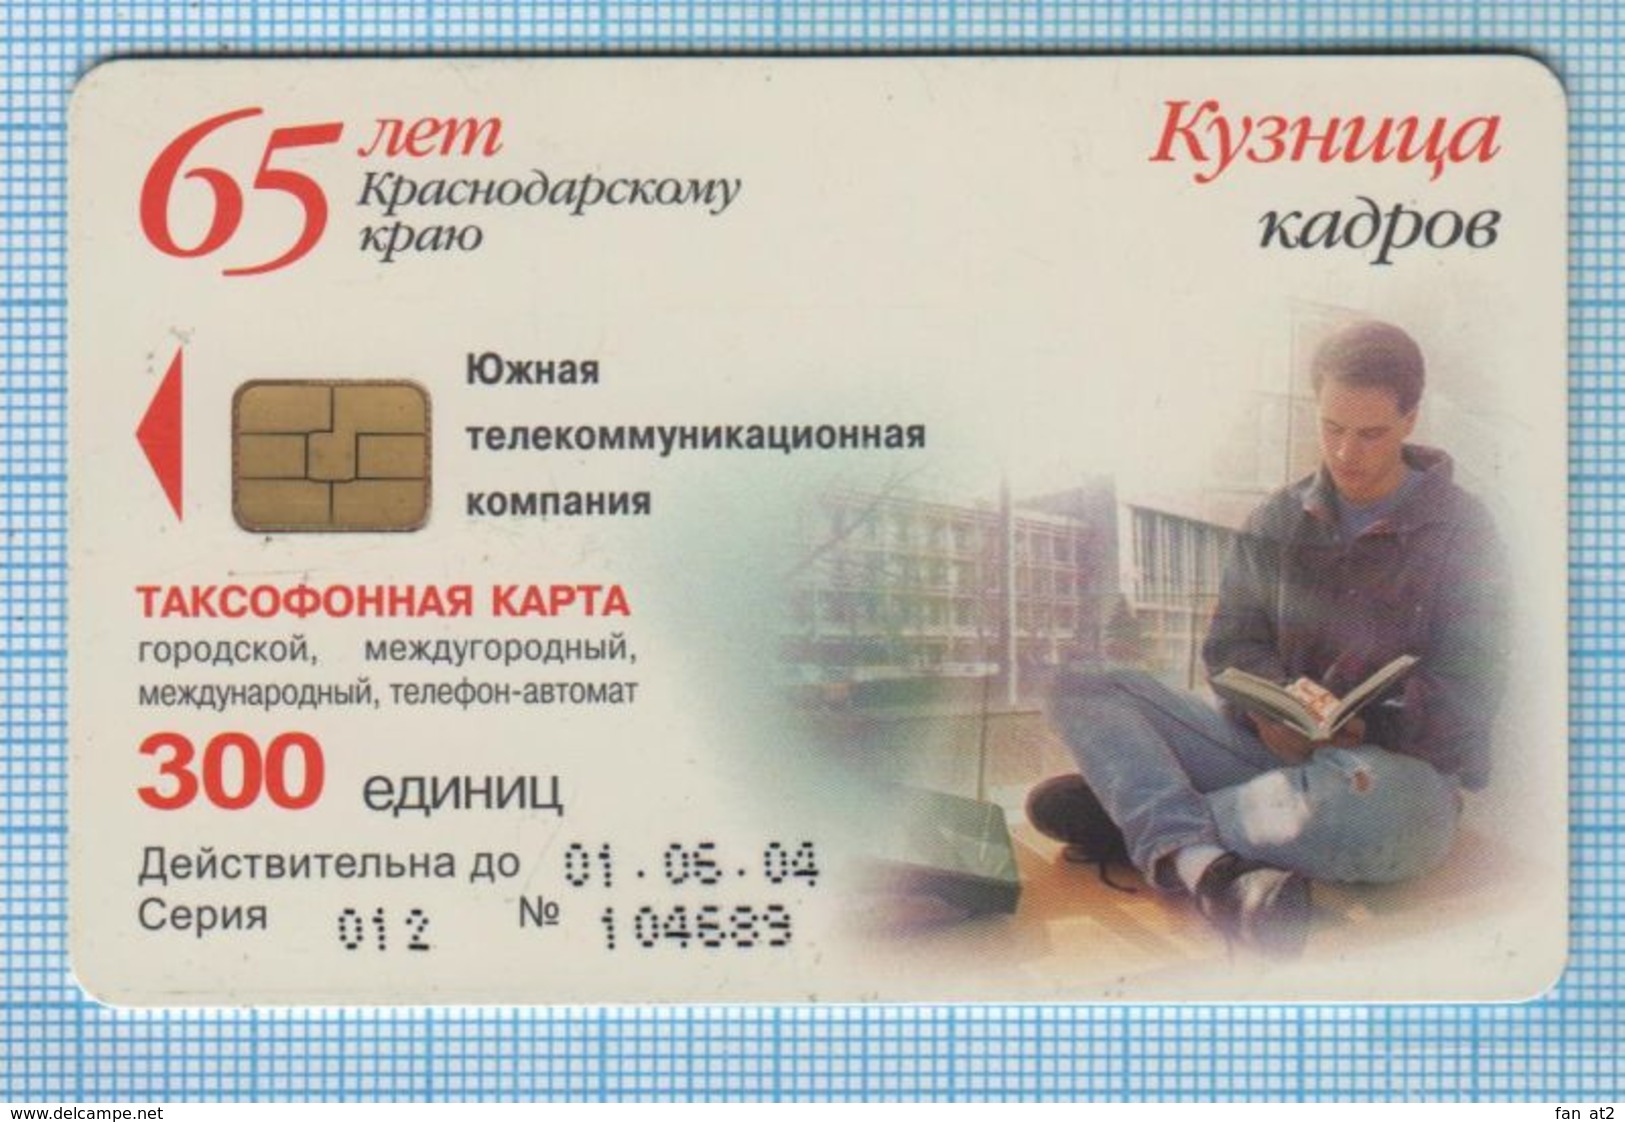 RUSSIA / KUBAN / PHONECARD / KRASNODAR KRAI 65 YEARS. SCHOOLS. FORGER PERSONNEL / 300 UNITS / 2004 - Russie